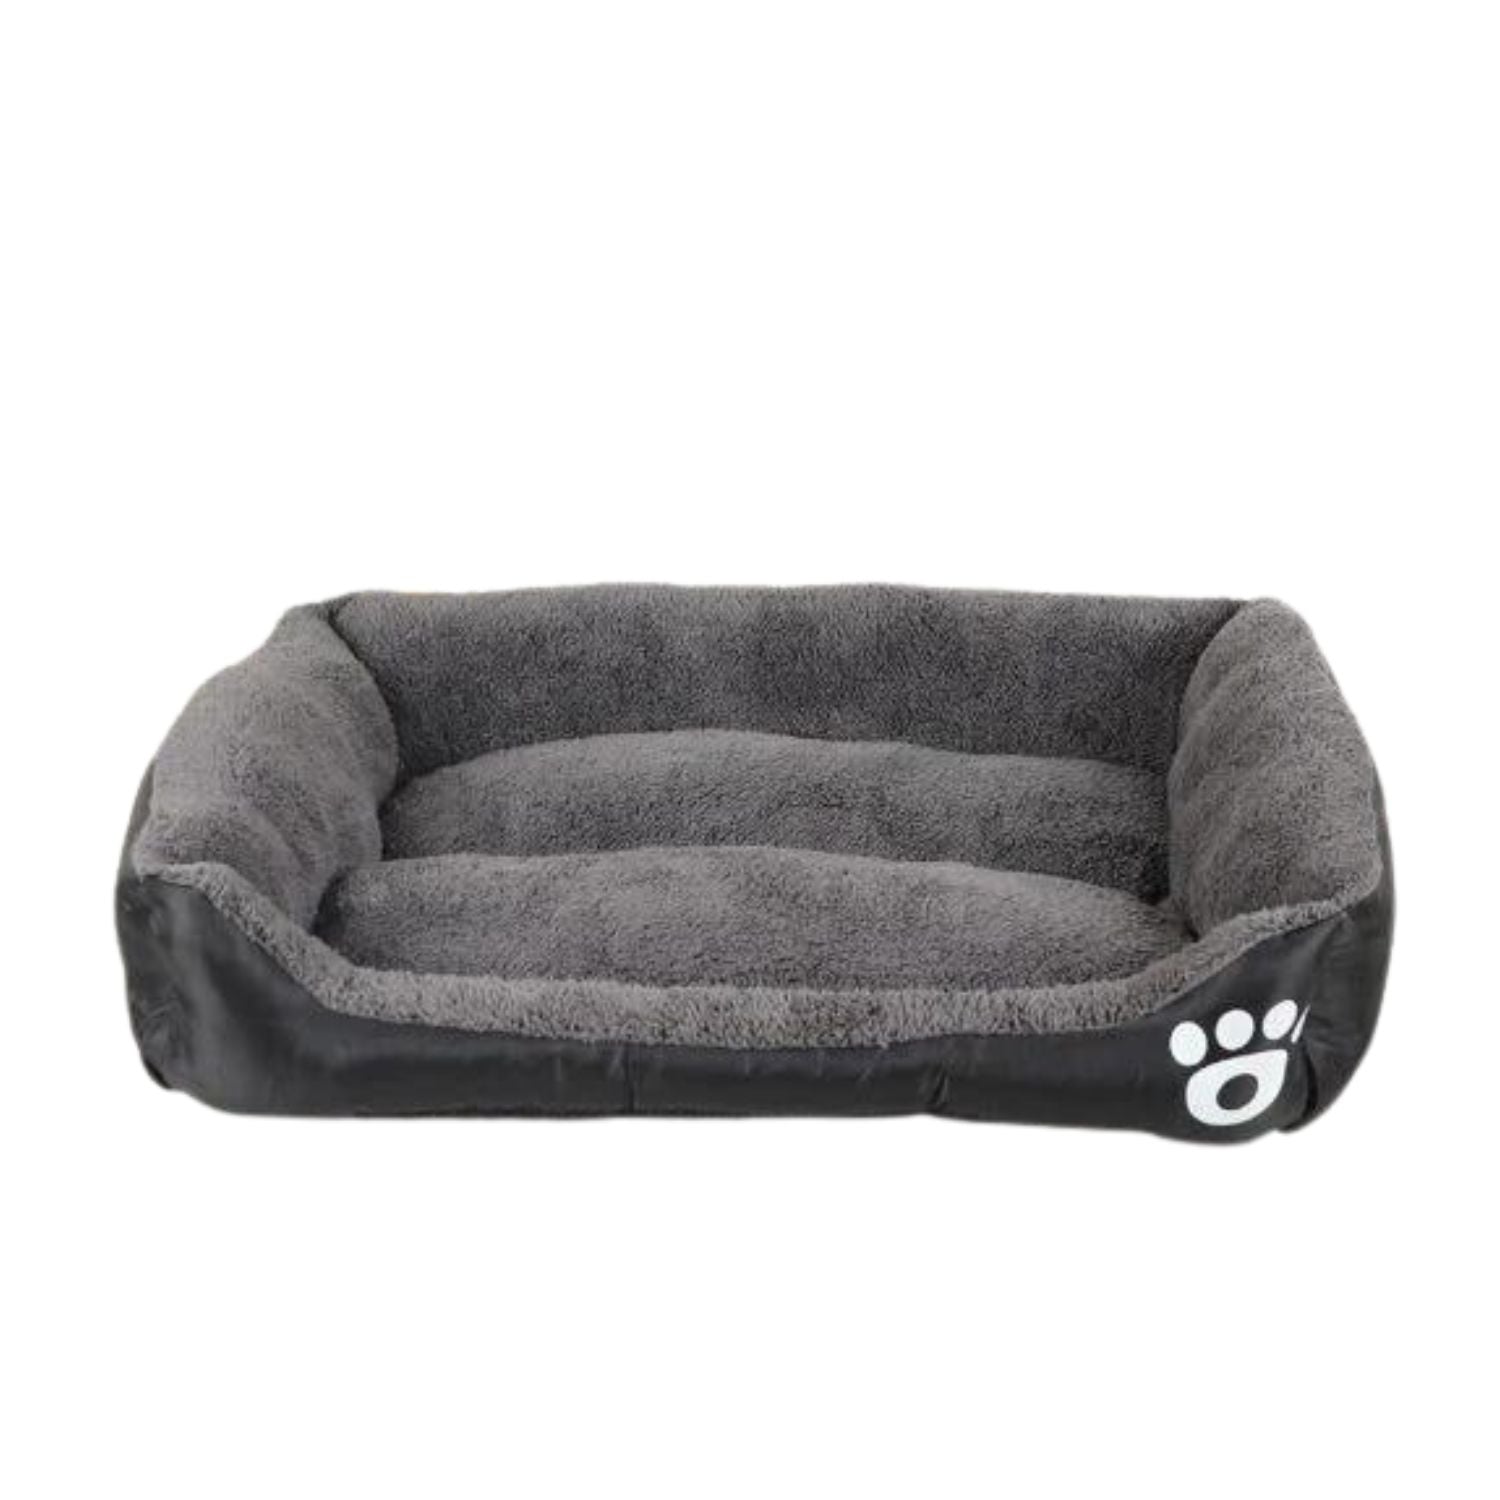 FLOOFI Pet Bed Square XL Size (Black+Dark Grey)